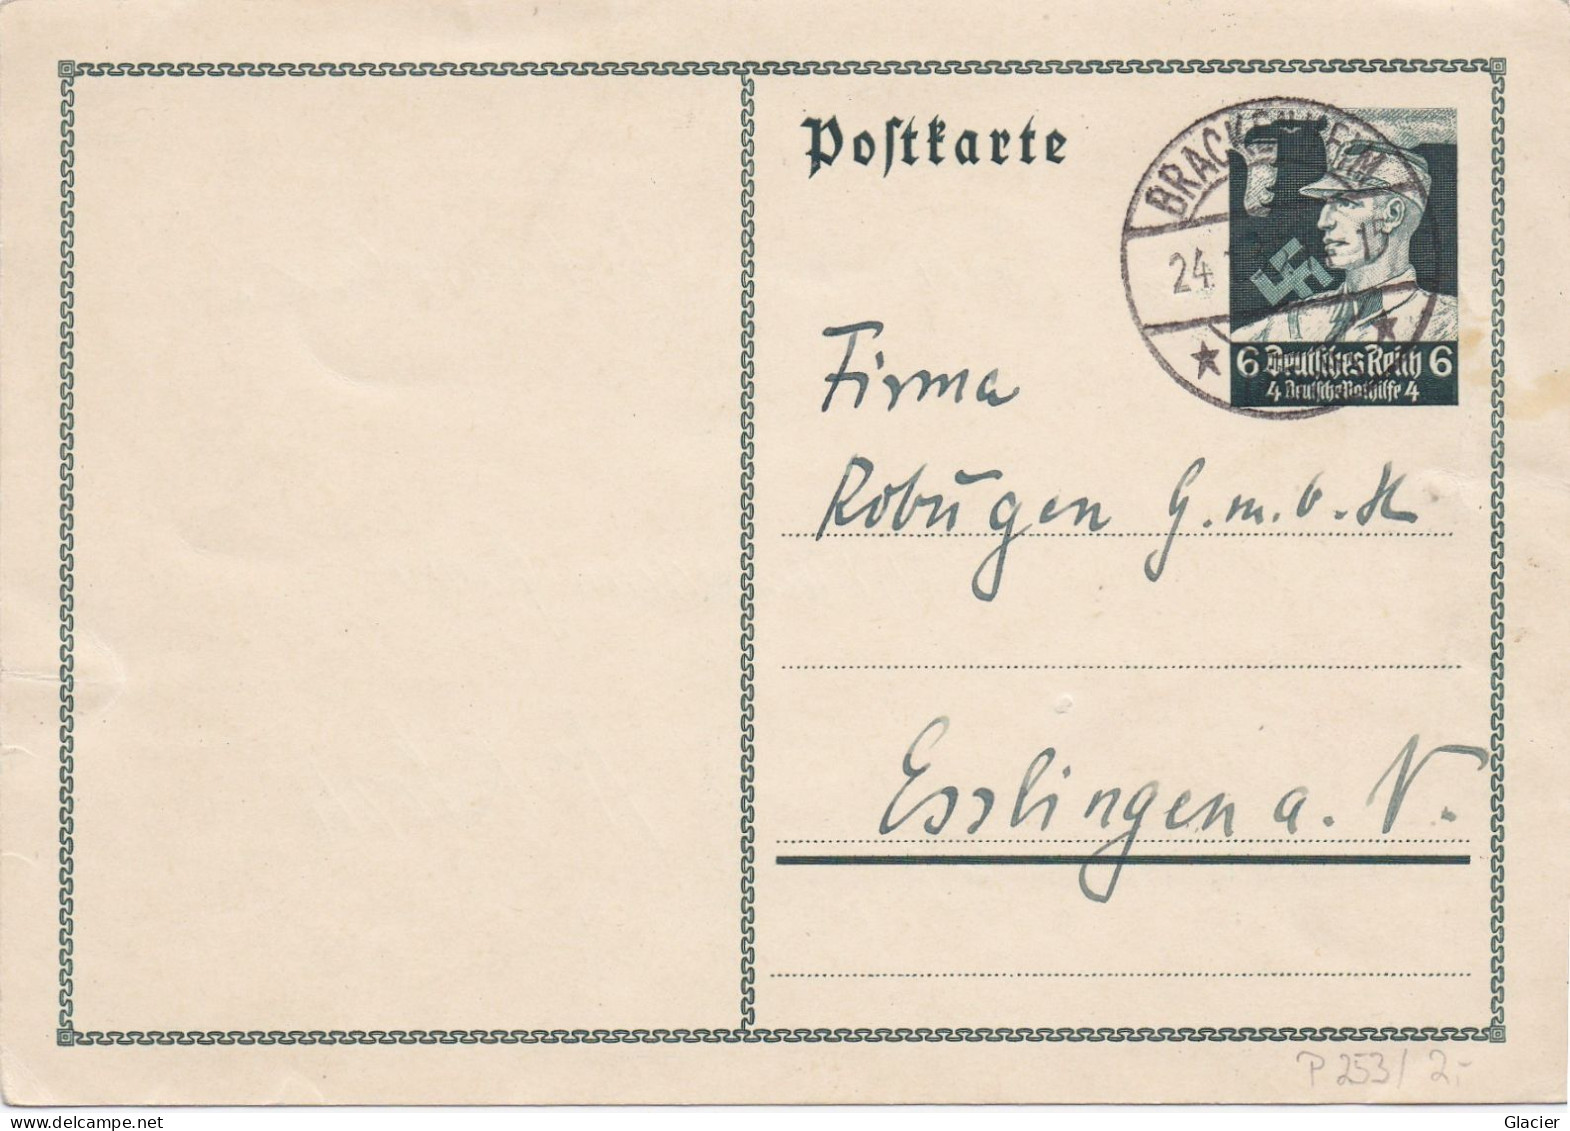 Ganzsache - Postkarte - REICH.1934. 6 + 4 Pf. - P 253 - Brackenheim  24 Jan. 1935 - Postkarten